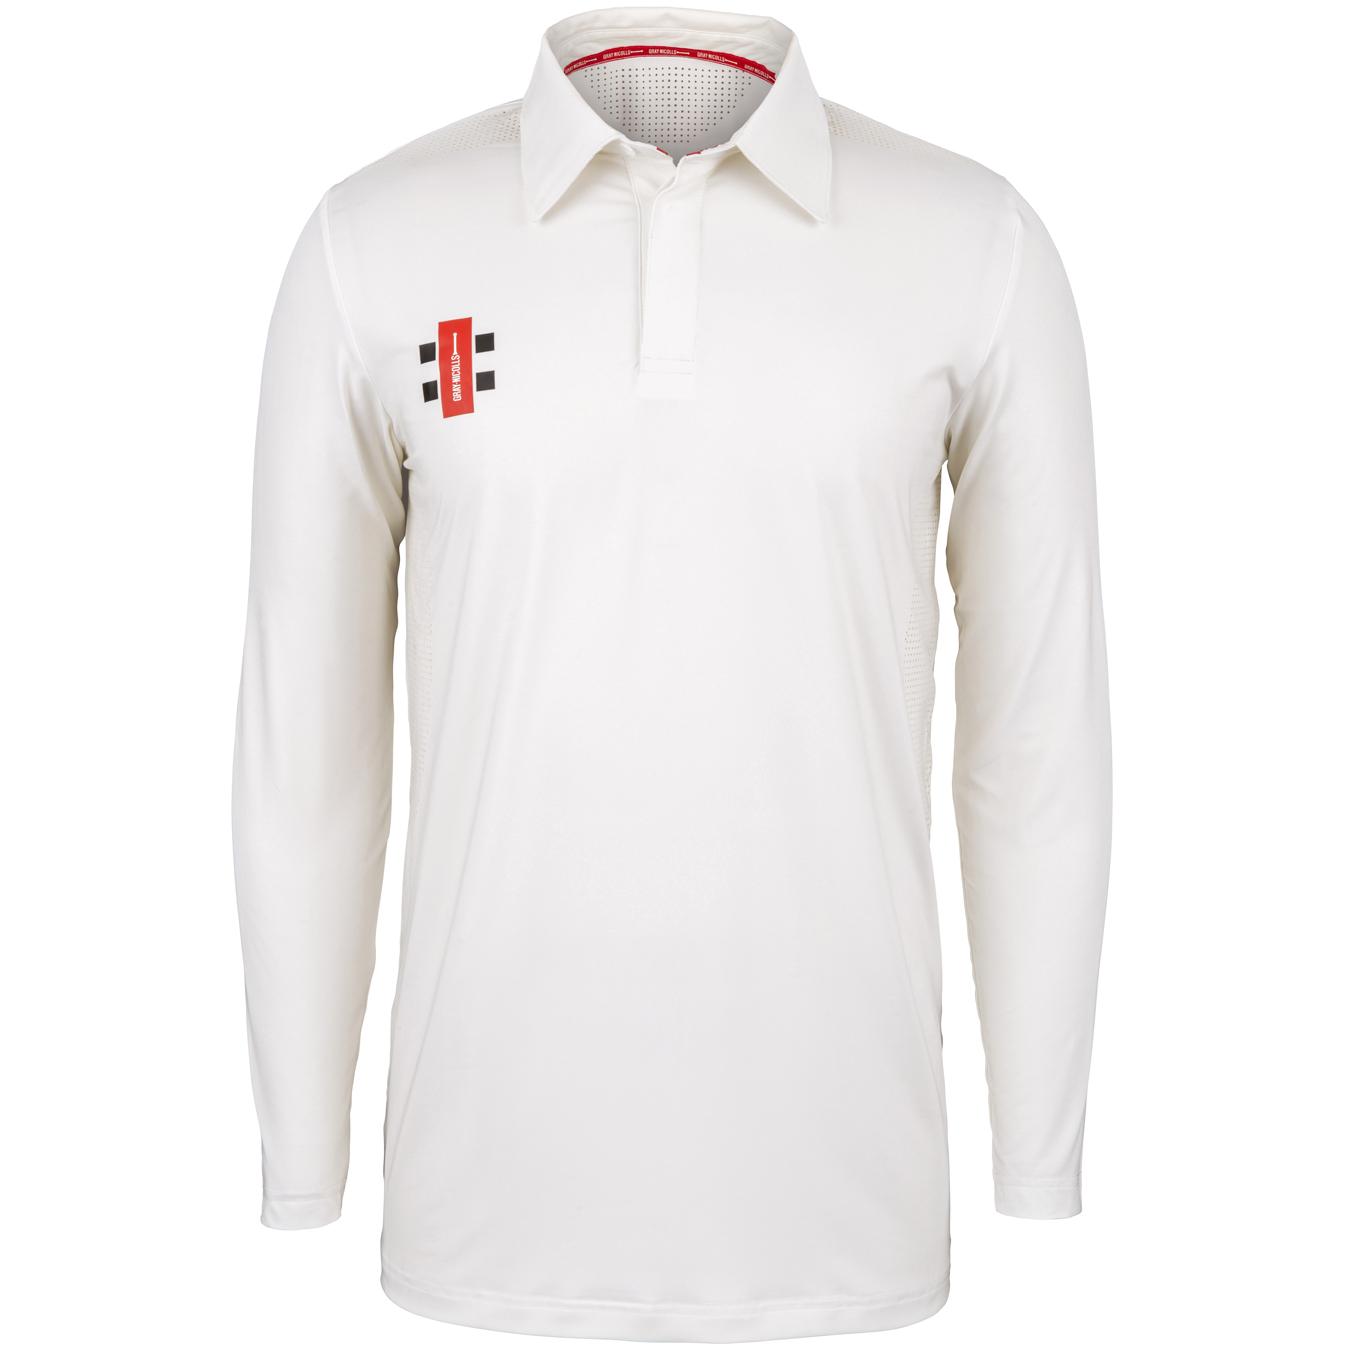 XS - 2XL Gray-Nicolls Velocity Long Sleeved Cricket Shirt Sizes: 